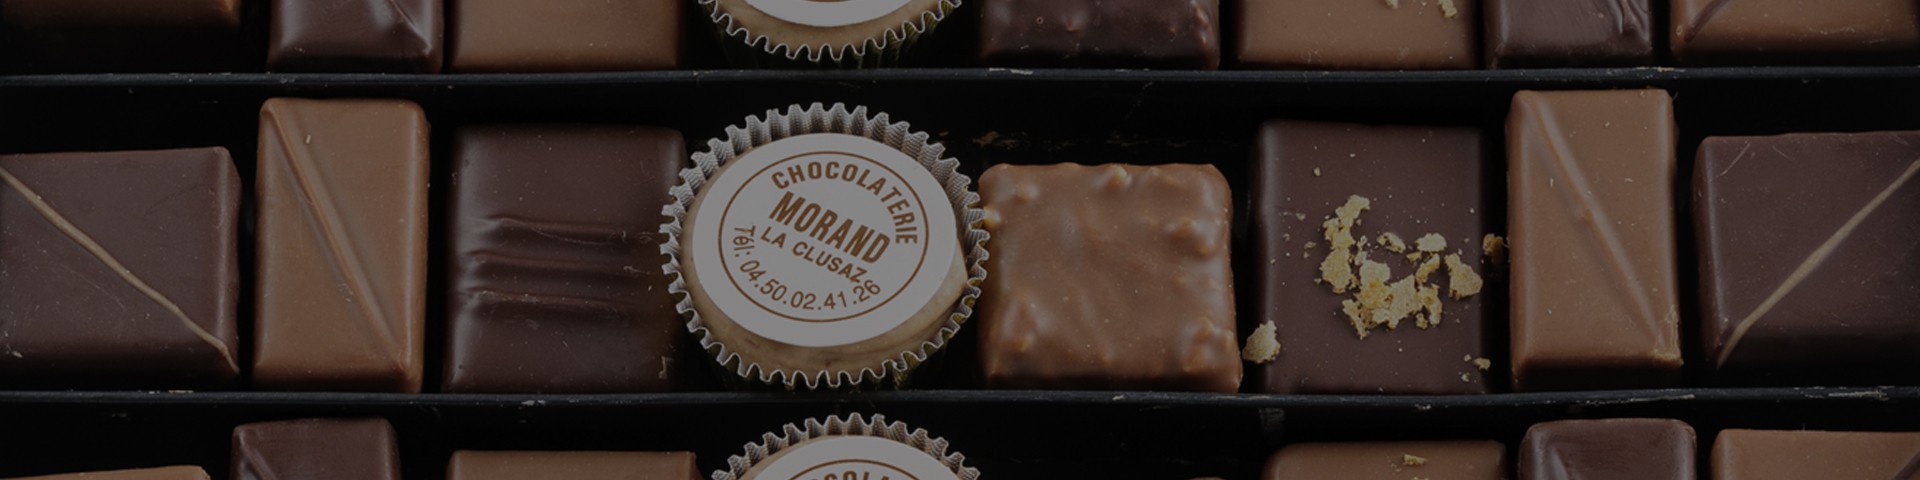 Pralinés | Chocolaterie Morand - la Clusaz